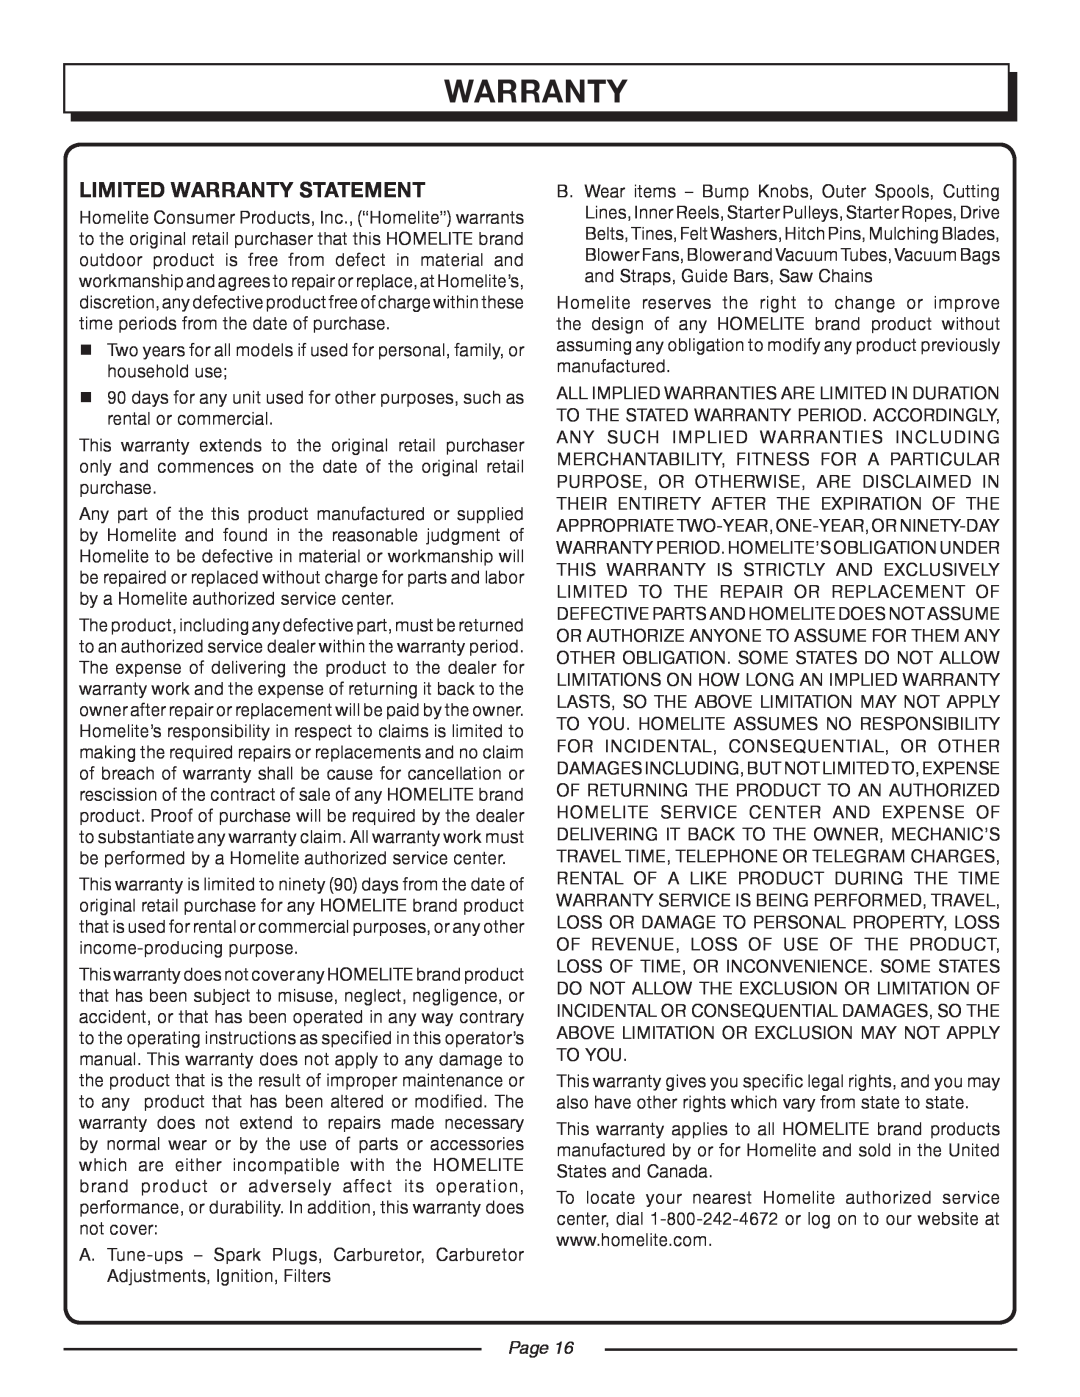 Homelite UT08981, UT08580 manual Limited Warranty Statement, Page 